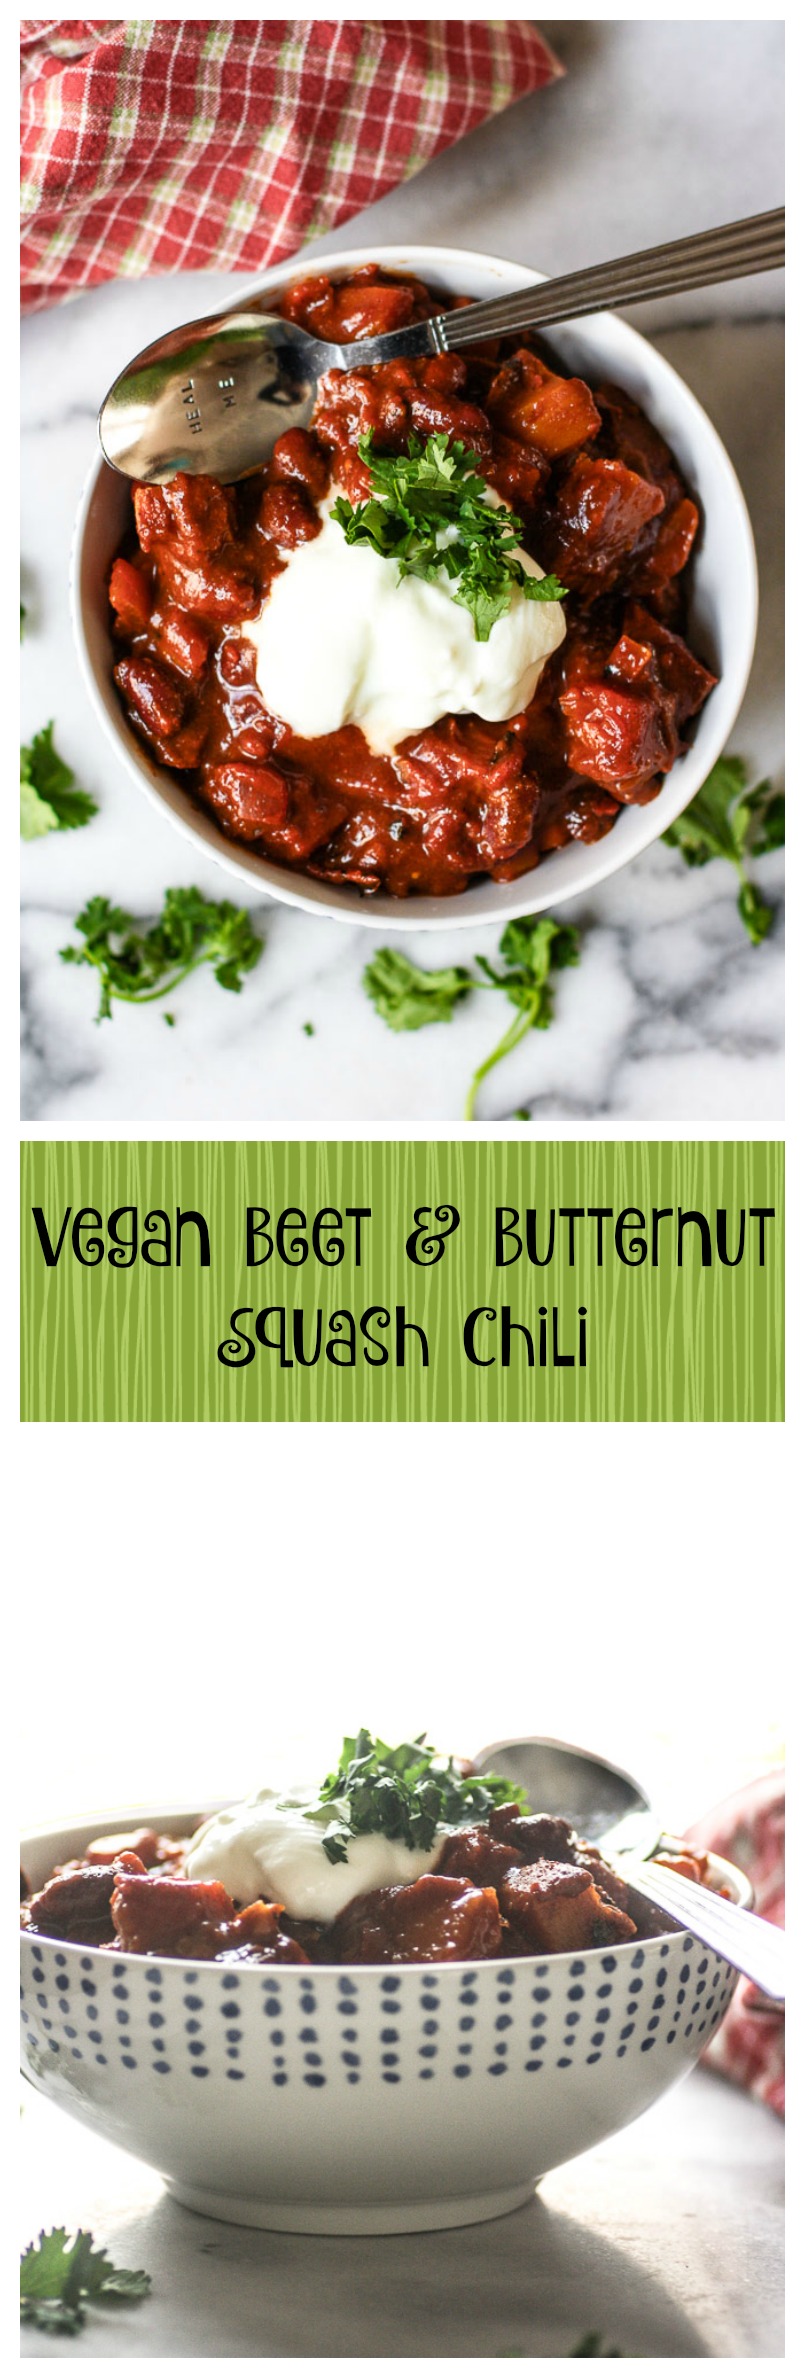 vegan beet & butternut squash chili